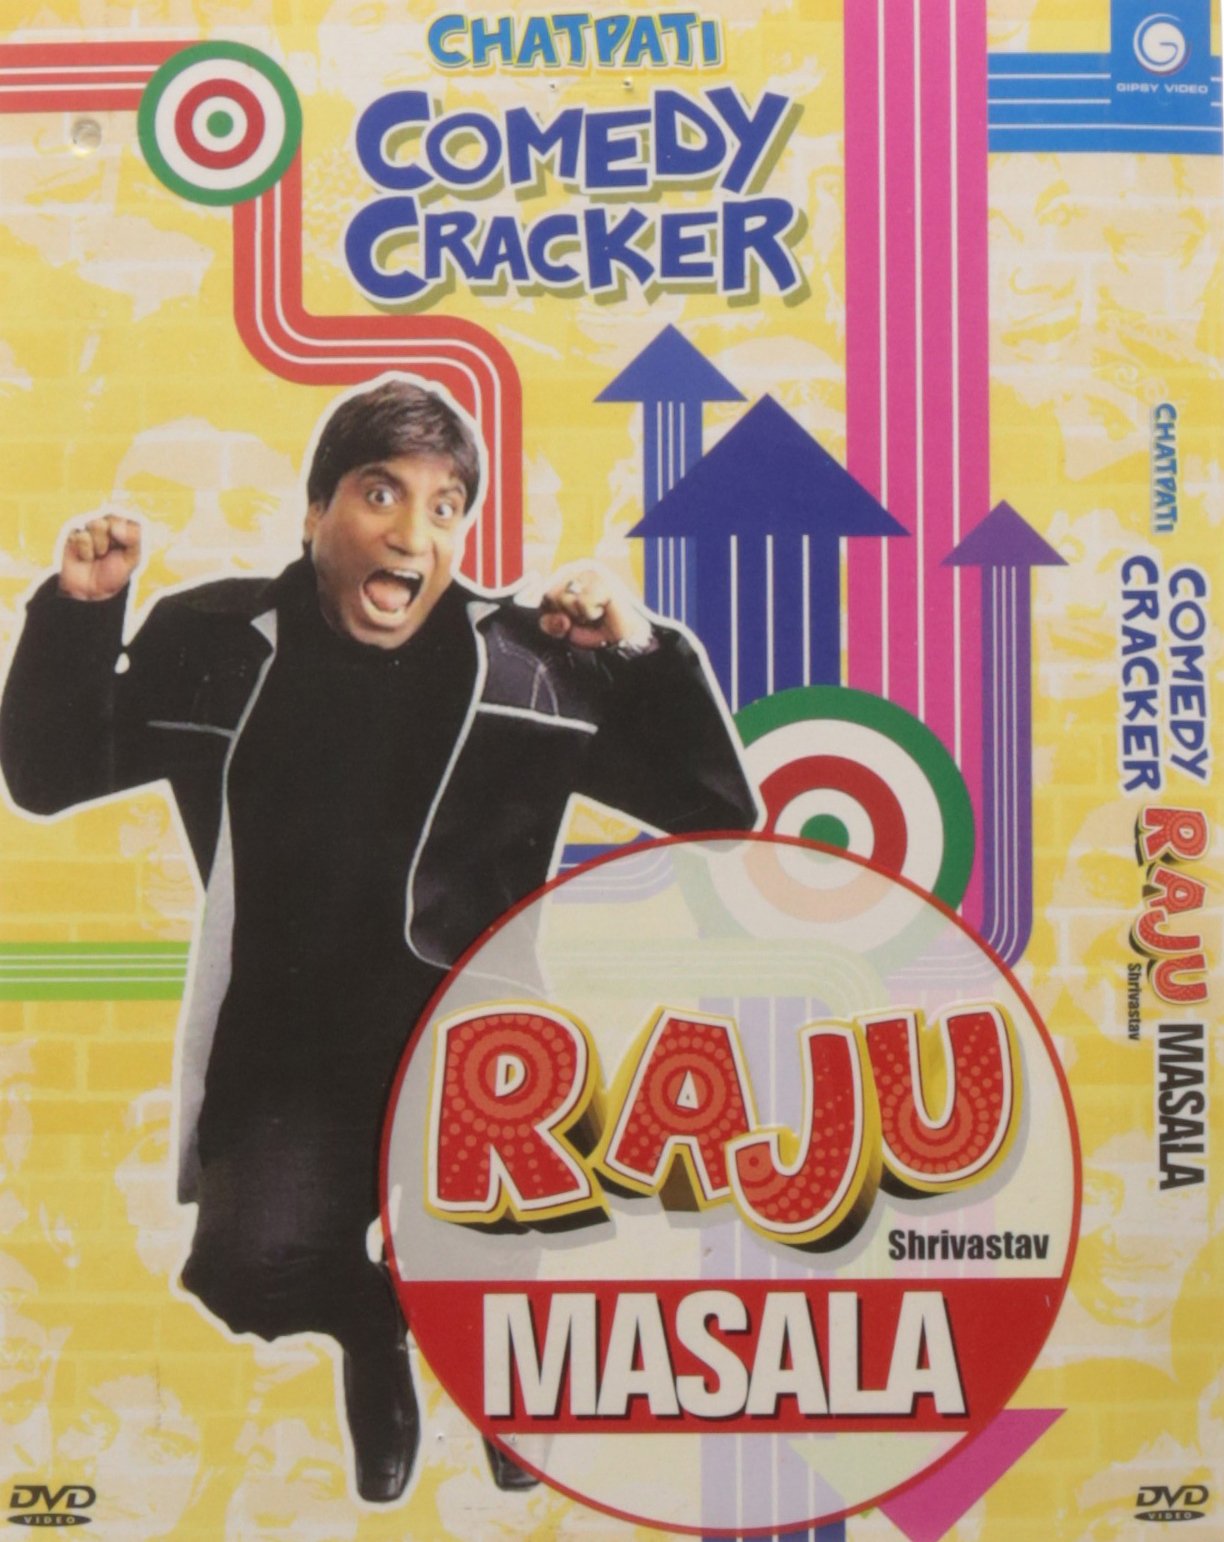 chatpati-comedy-cracker-raju-masala-movie-purchase-or-watch-online